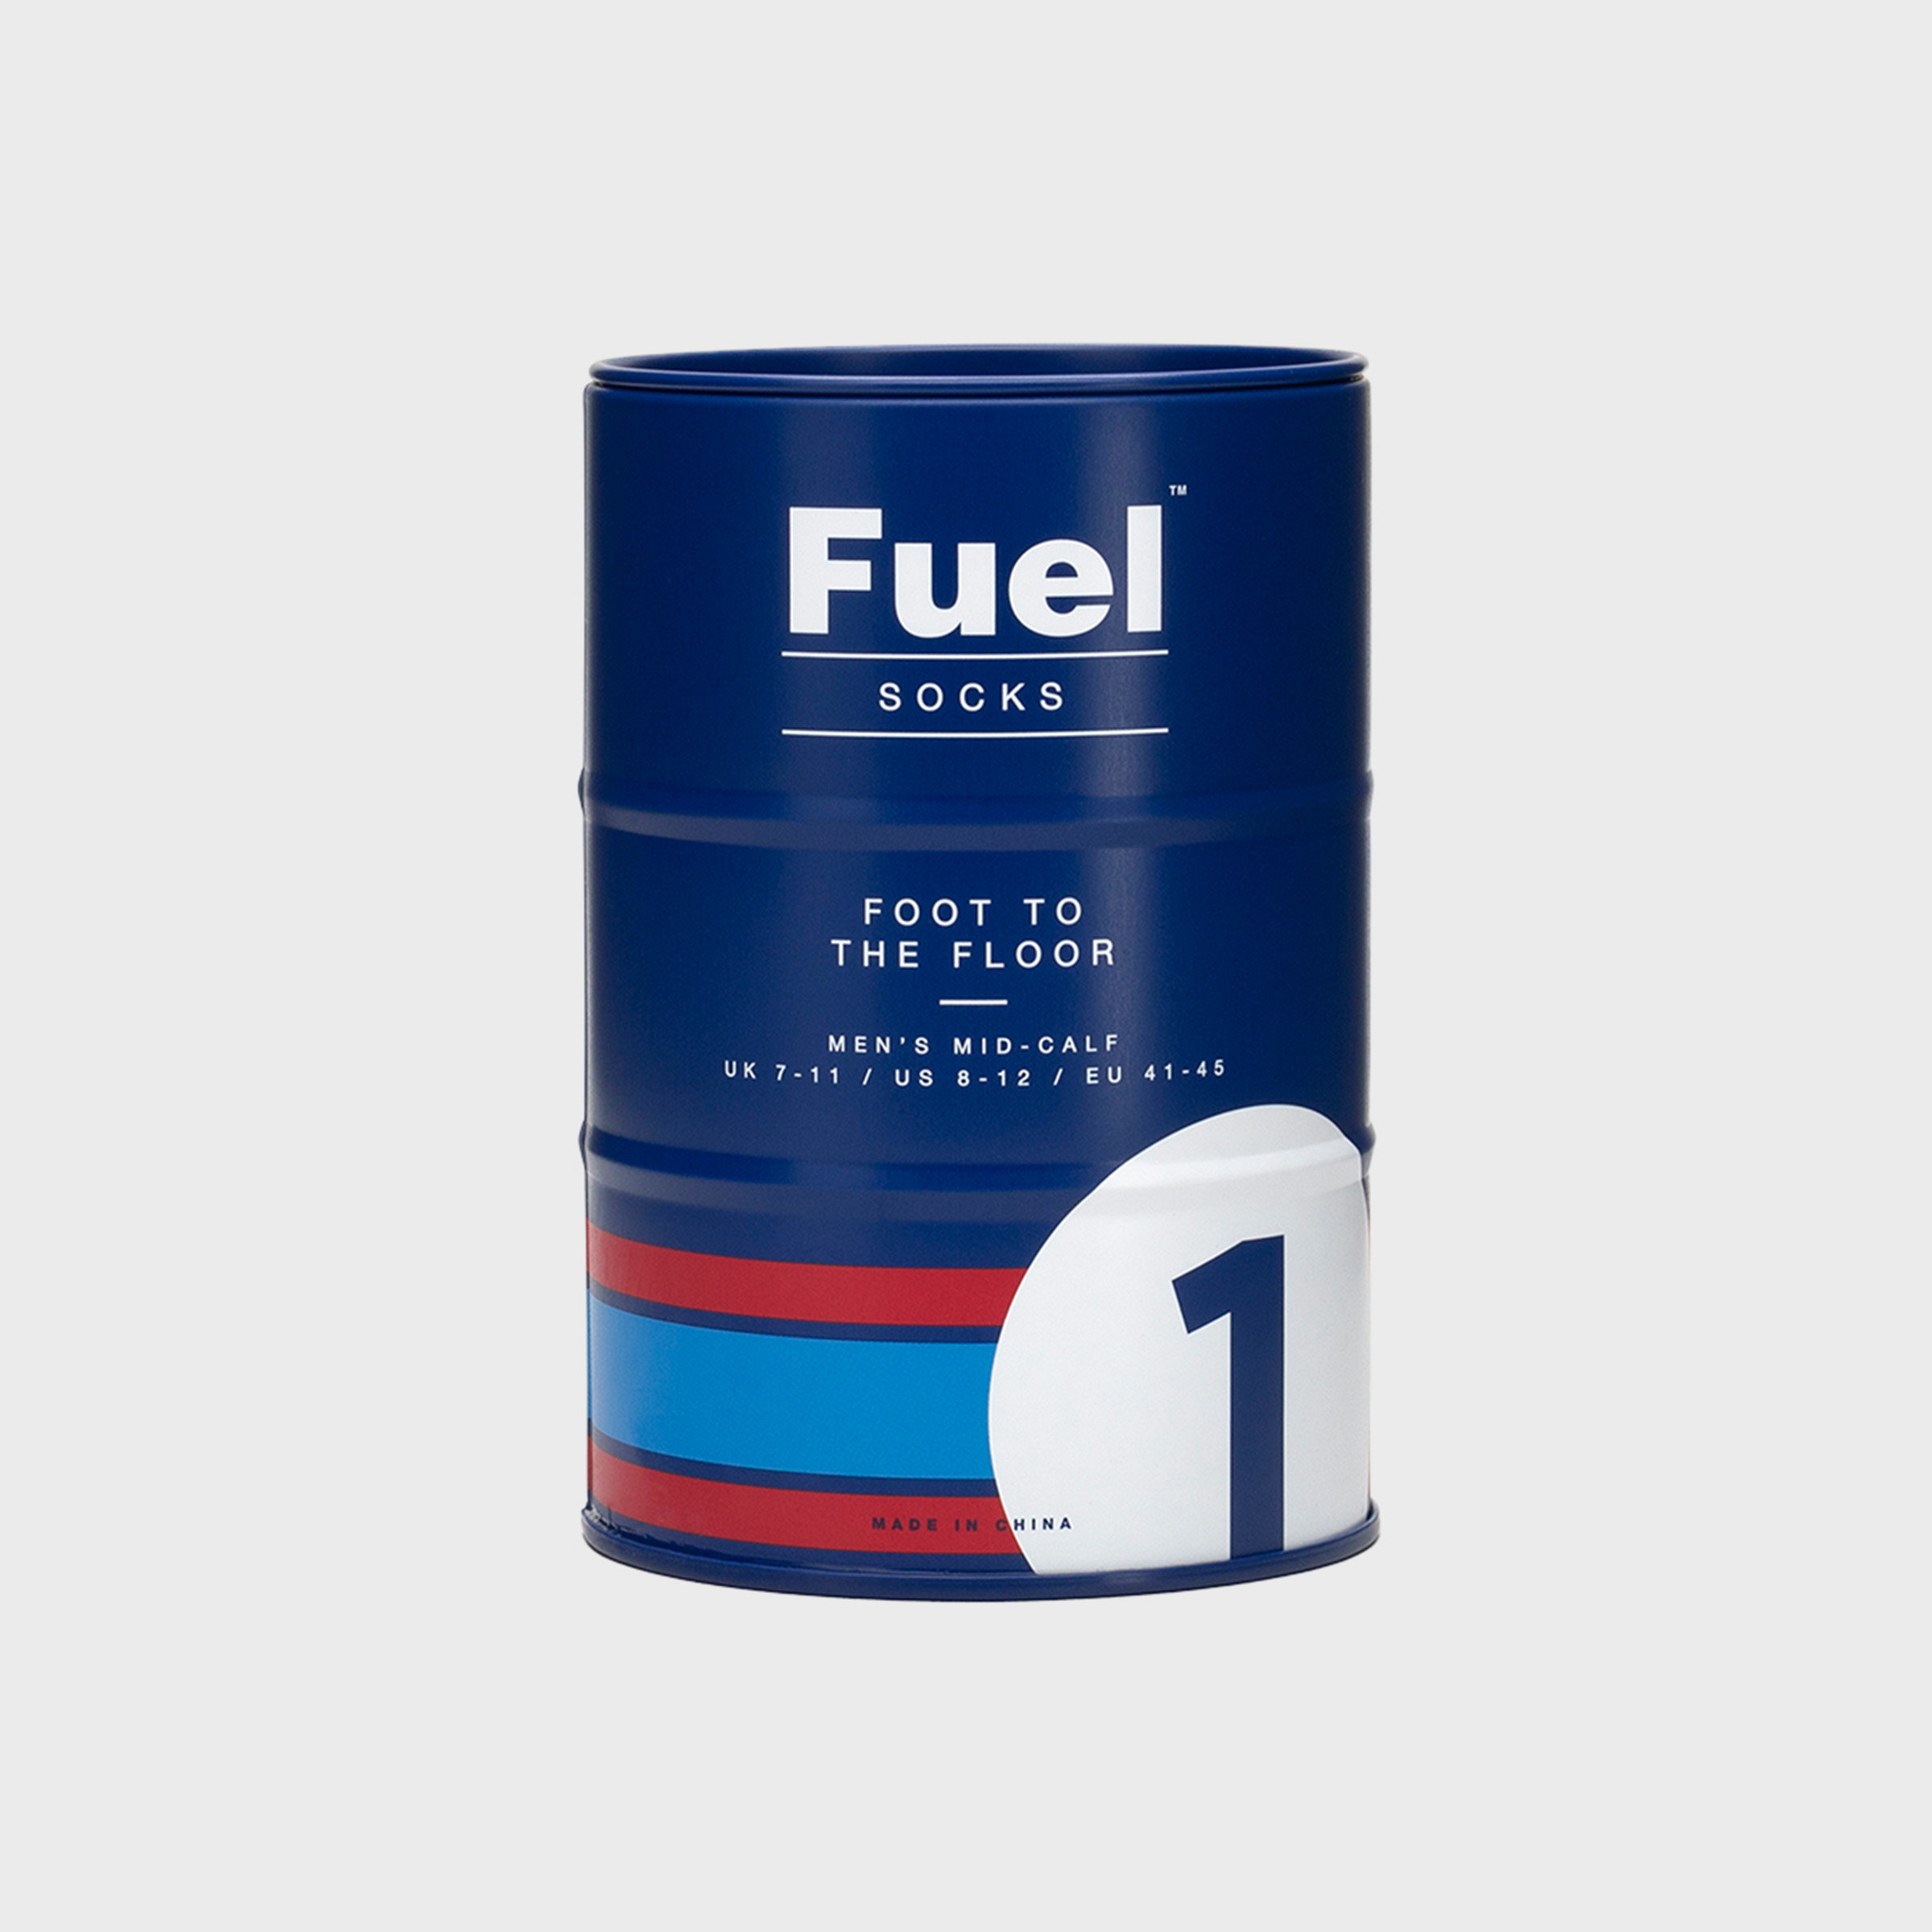 Fuel Motor racing socks in an oil can